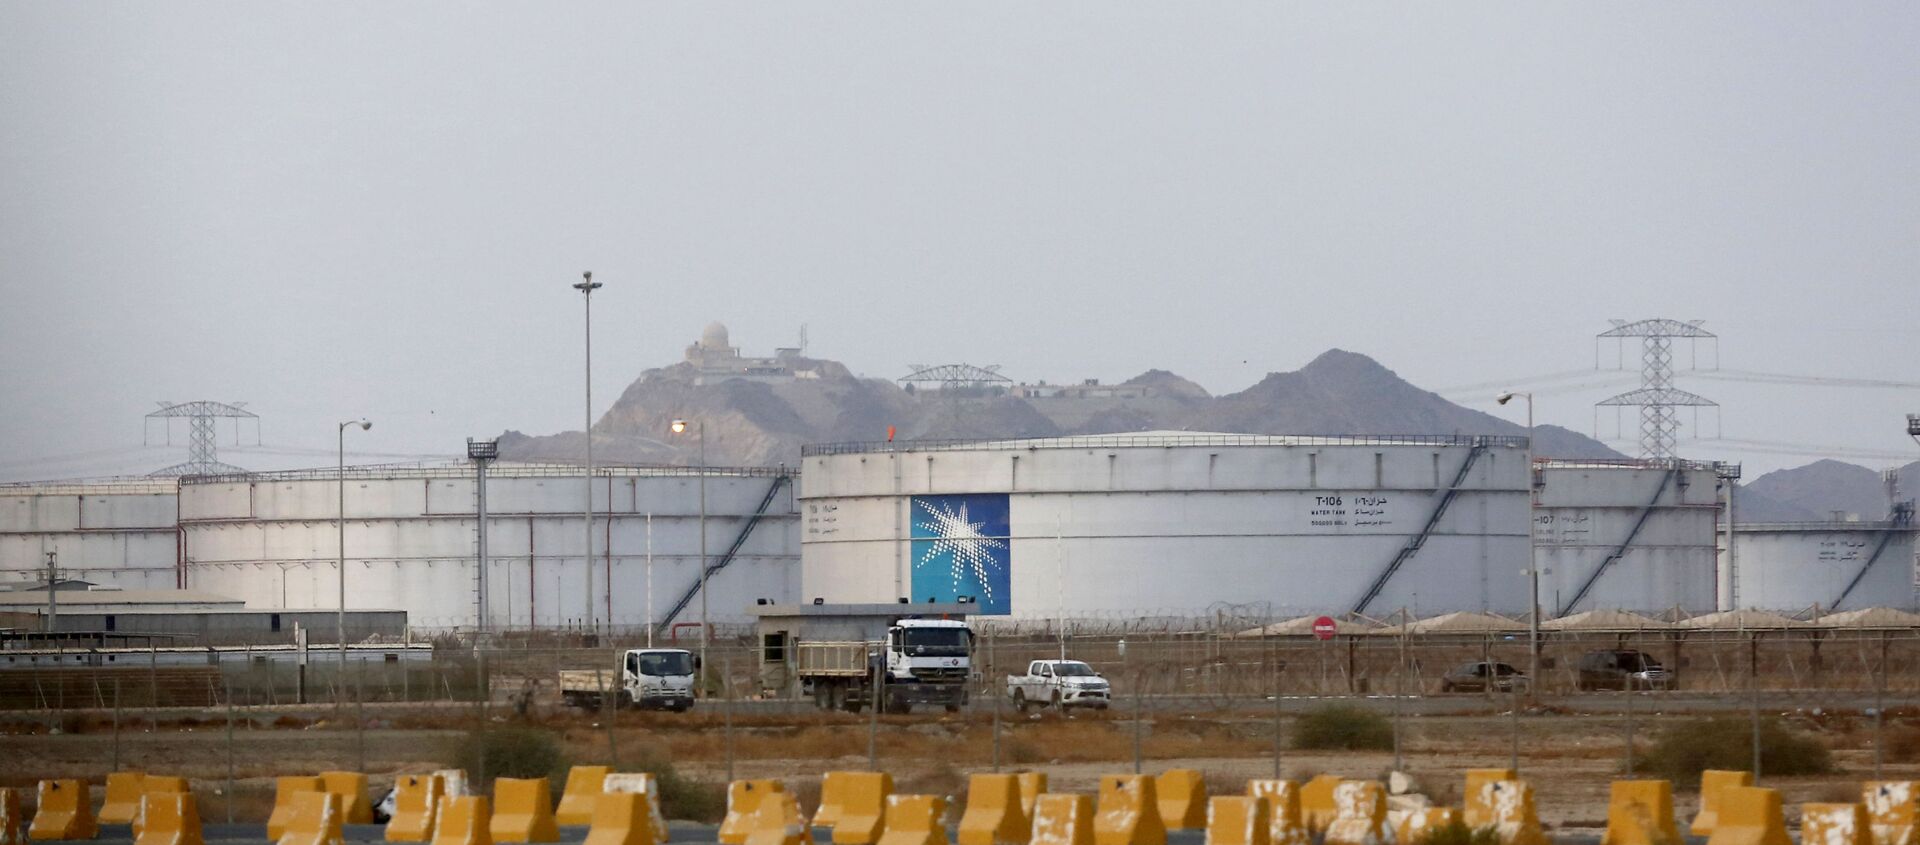 Storage tanks are seen at the North Jiddah bulk plant, an Aramco oil facility, in Jiddah, Saudi Arabia - Sputnik International, 1920, 04.03.2021